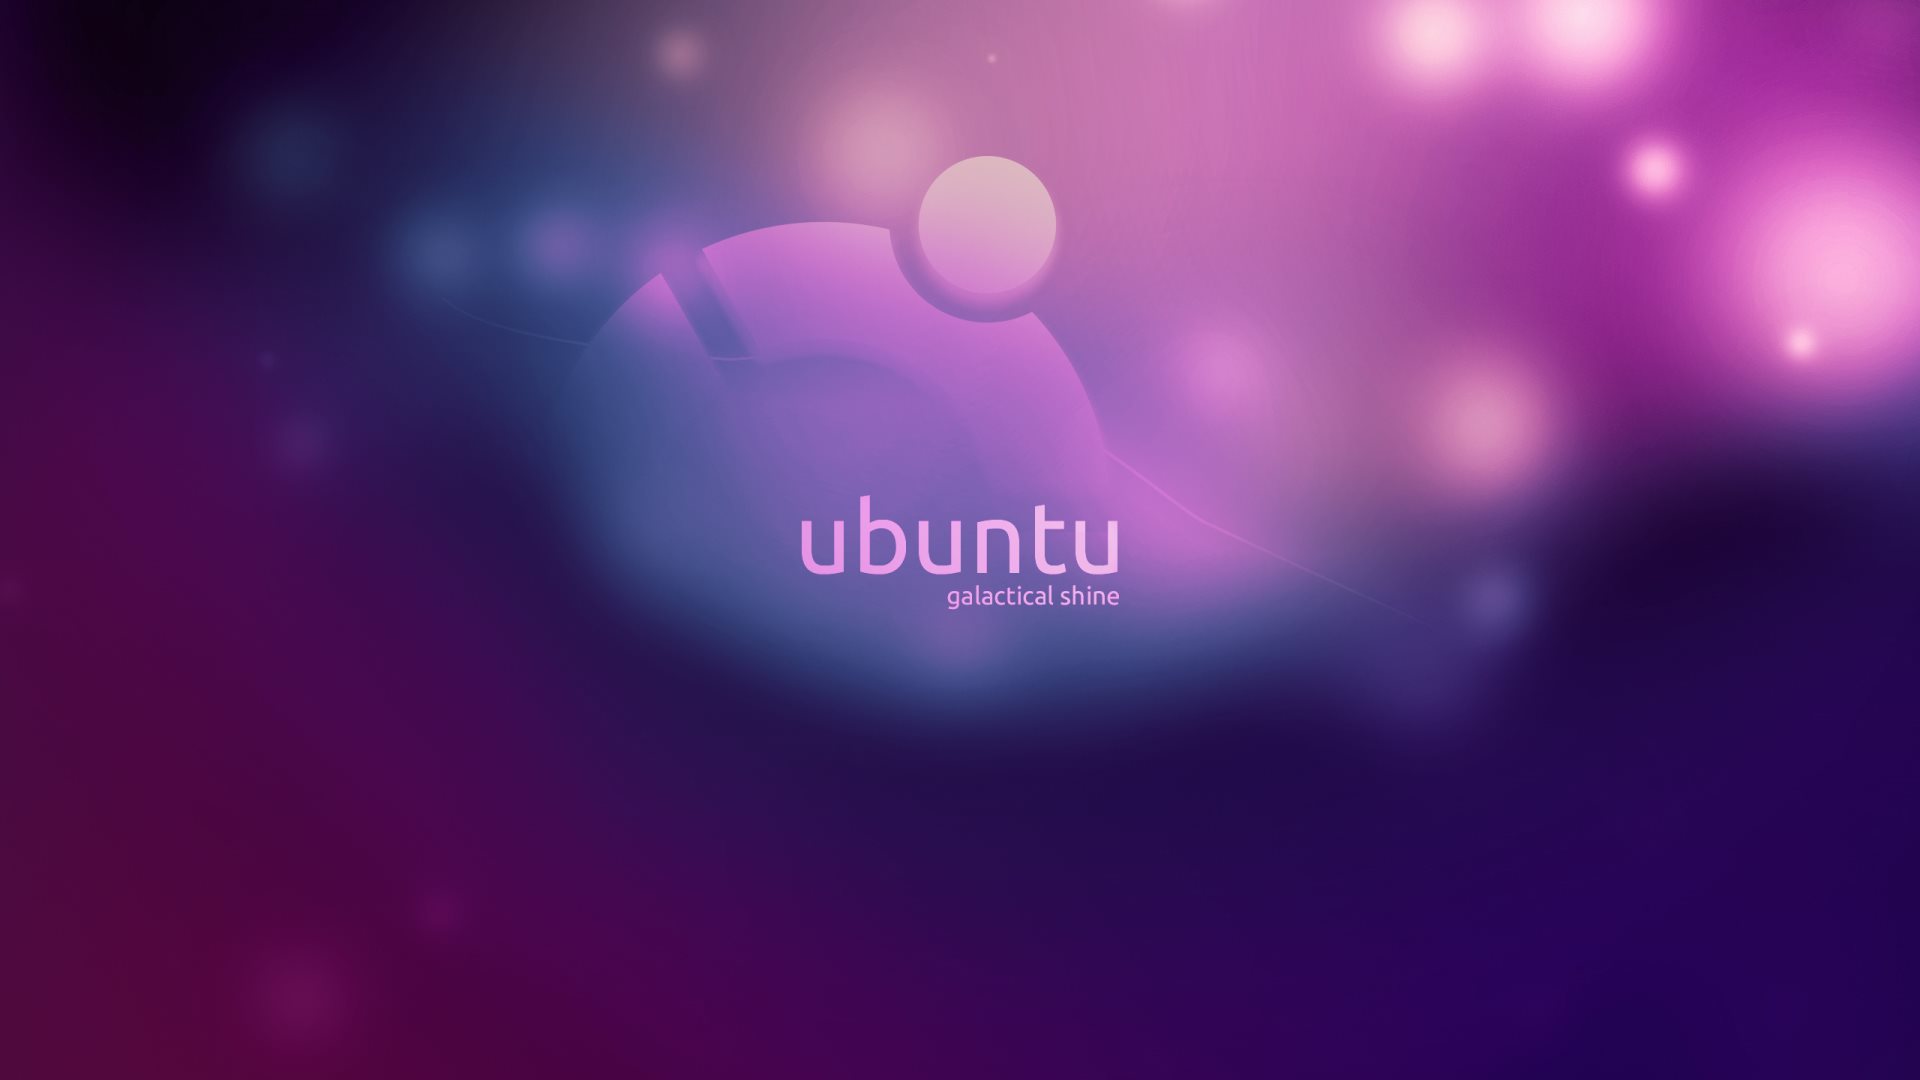 ubuntu desktop images